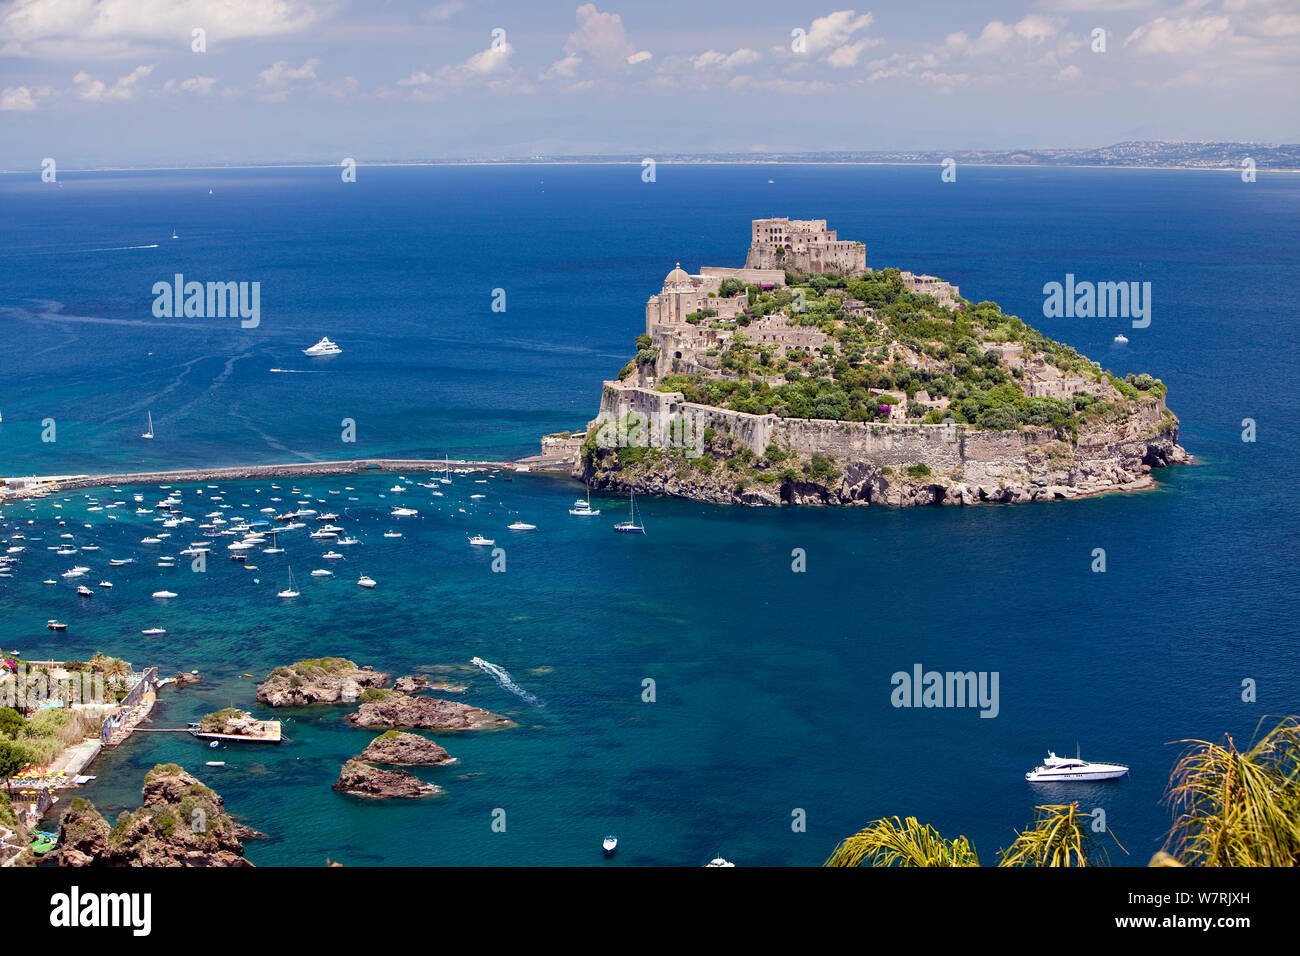 Castello / castle Aragonese, Ischia Island, Italy, Tyrrhenian Sea, Mediterranean Stock Photo